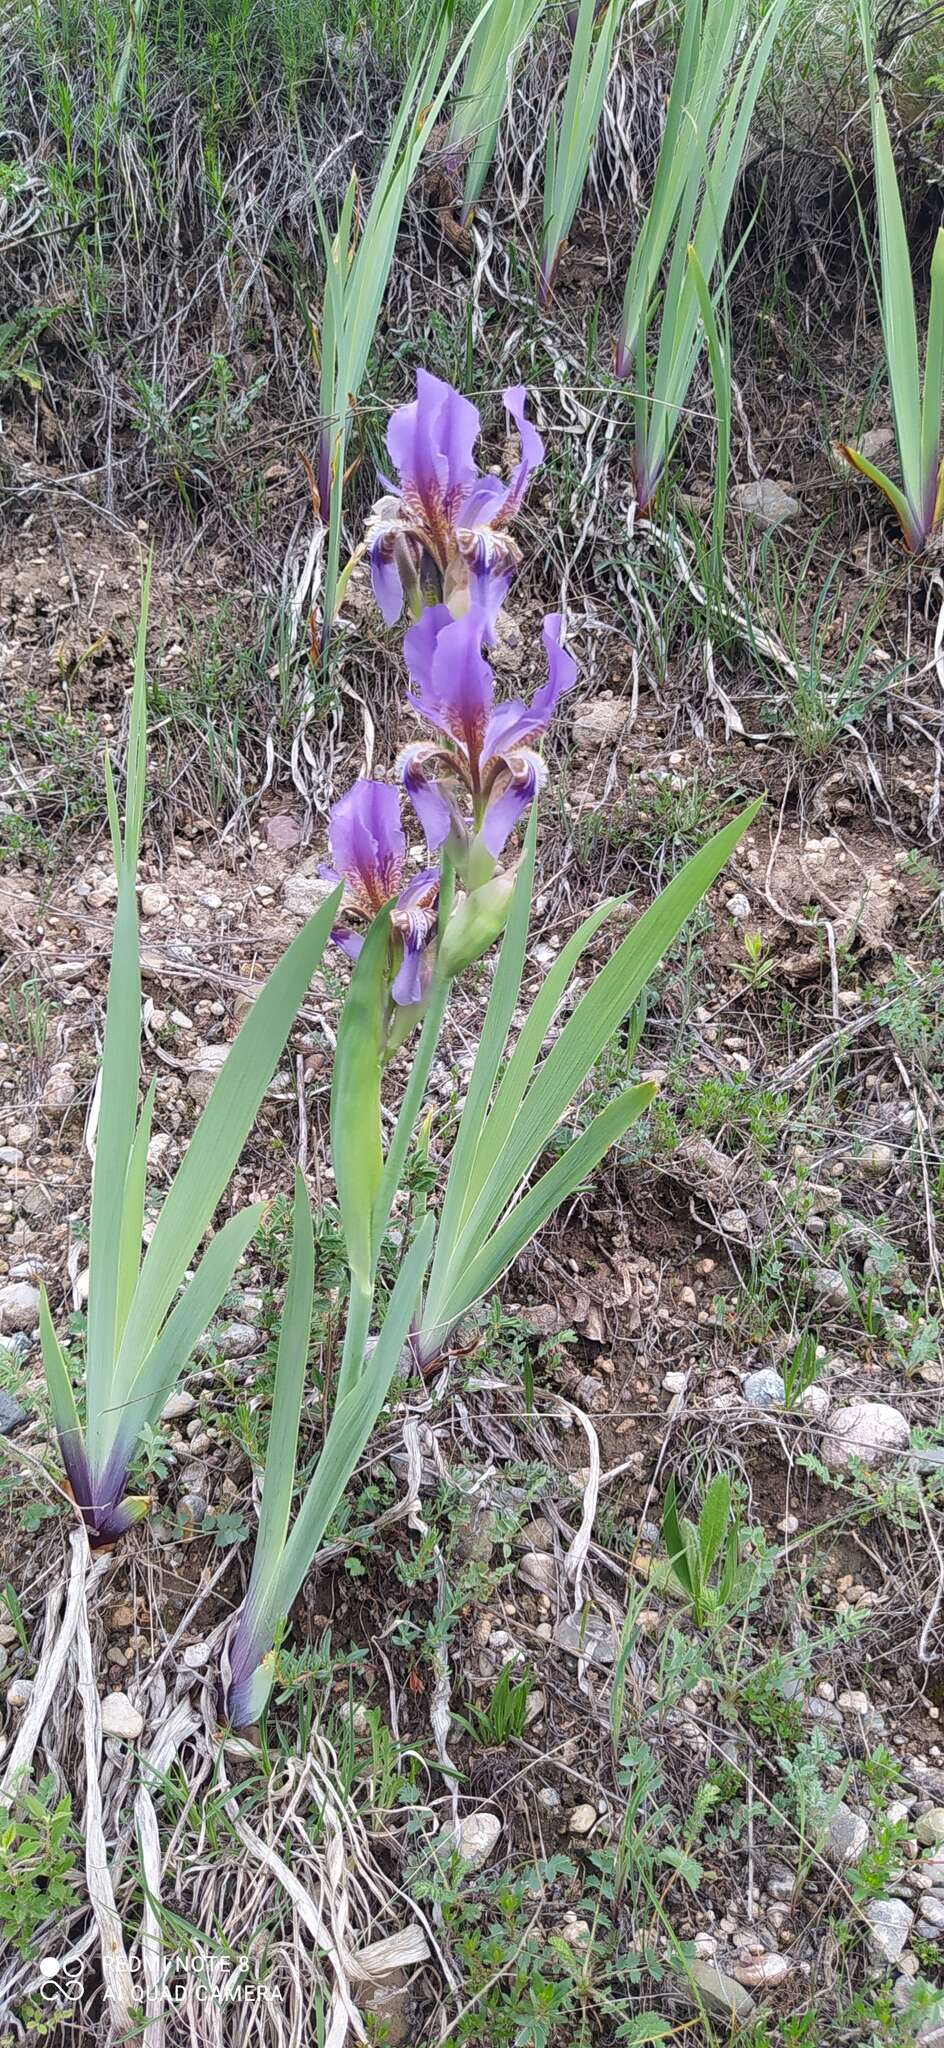 Image of Iris alberti Regel